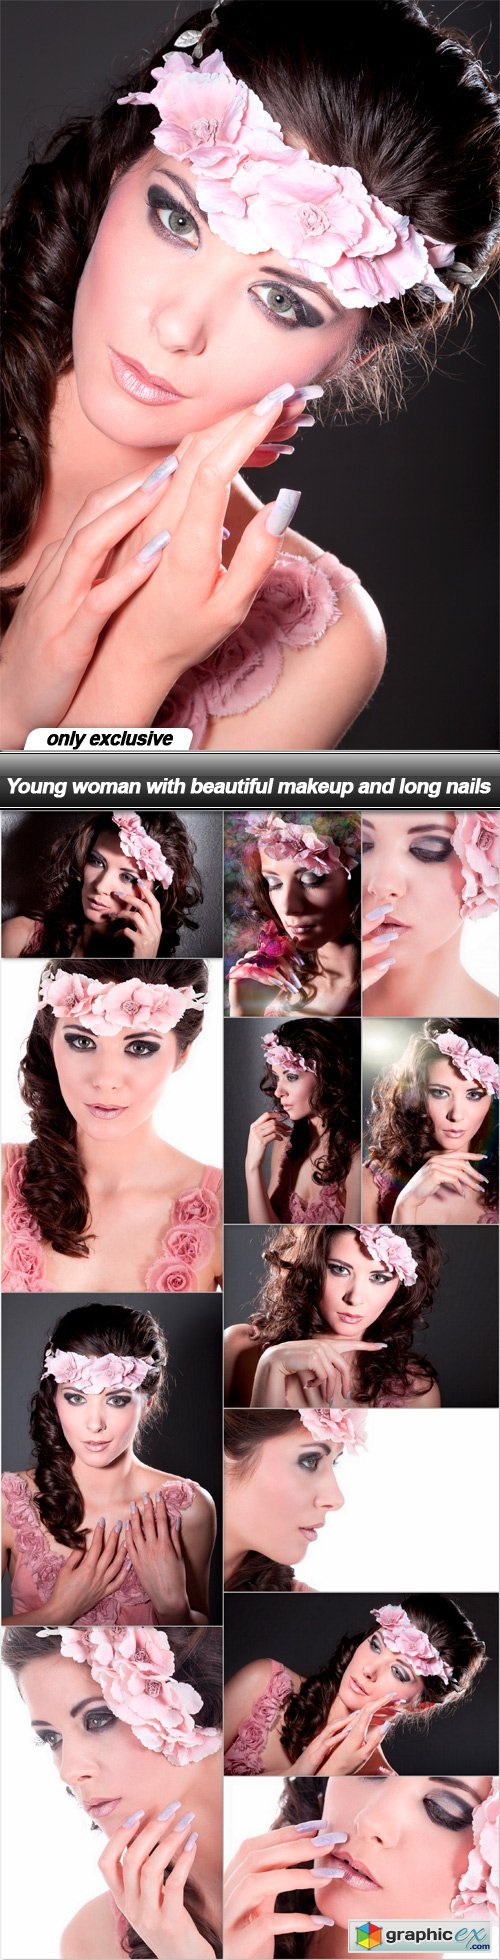 Young woman with beautiful makeup and long nails - 13 UHQ JPEG